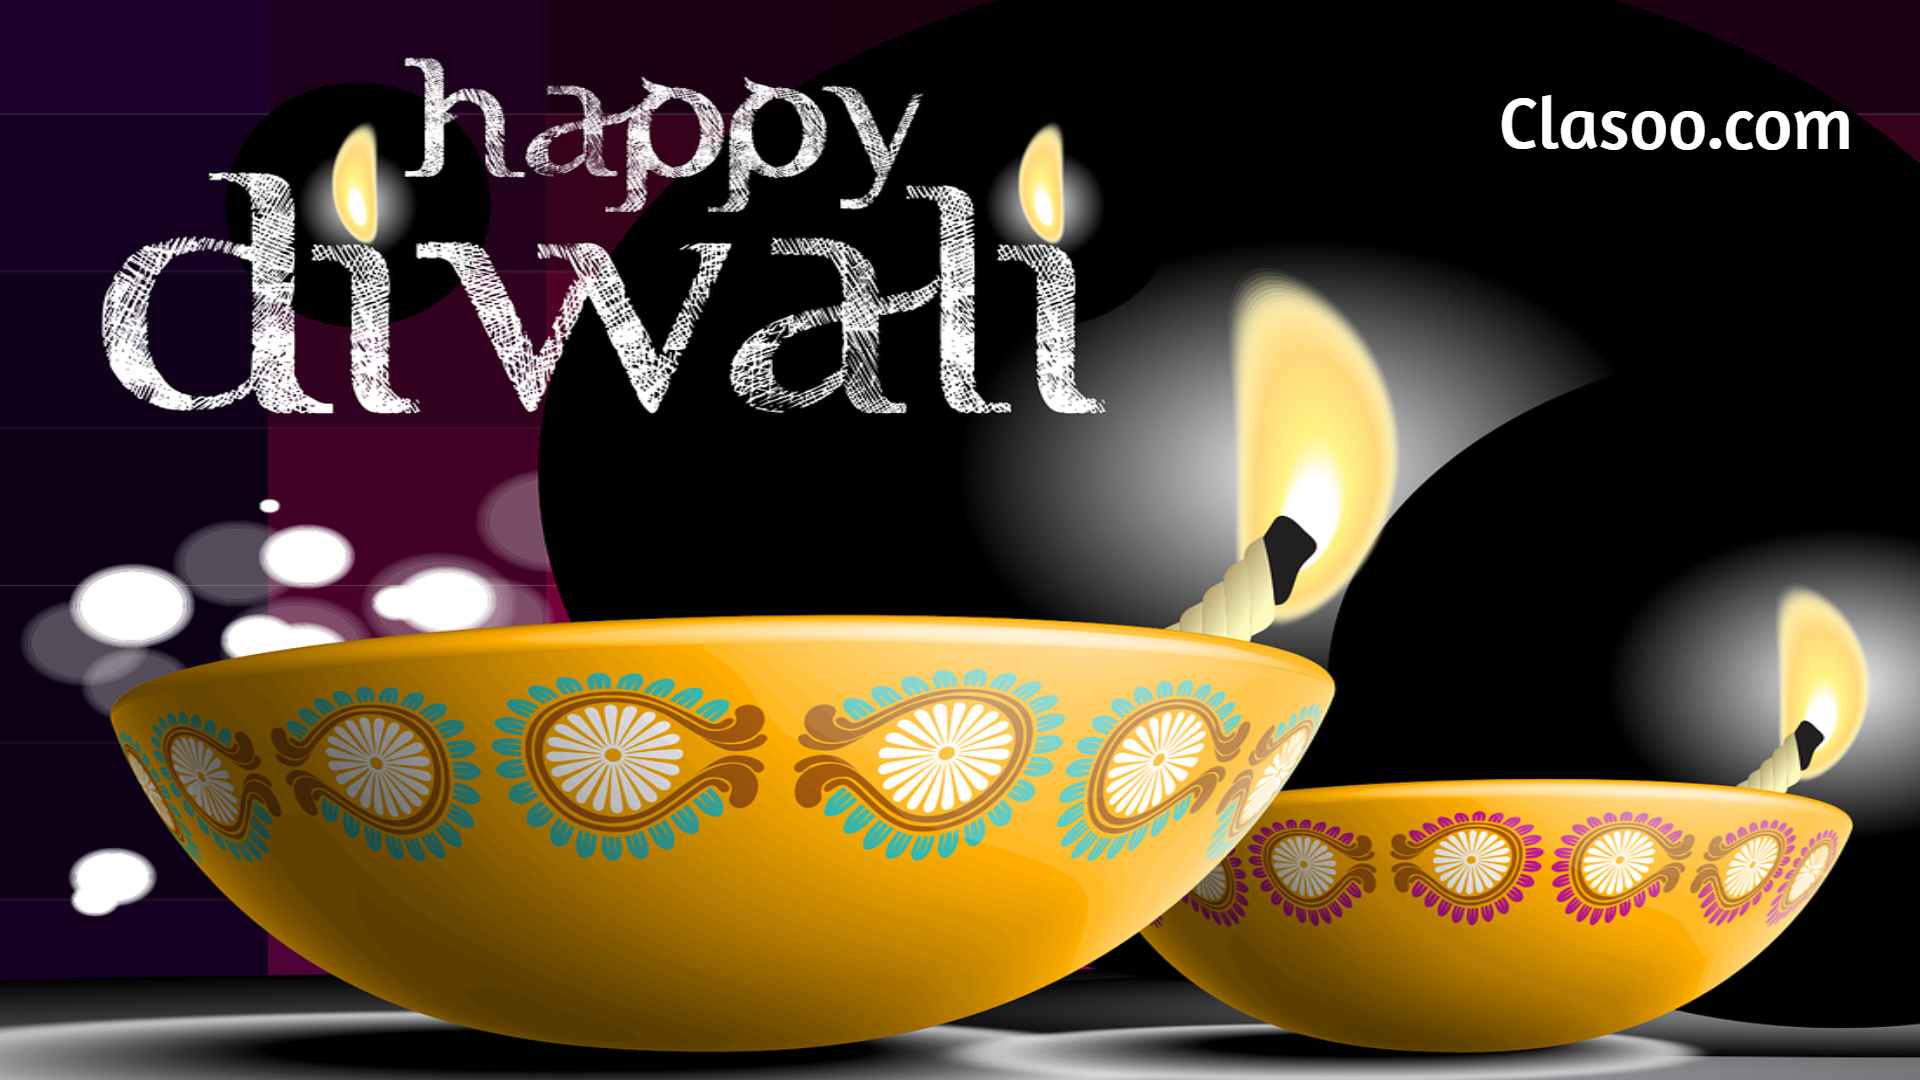 Happy Diwali Whatsapp Status image 2